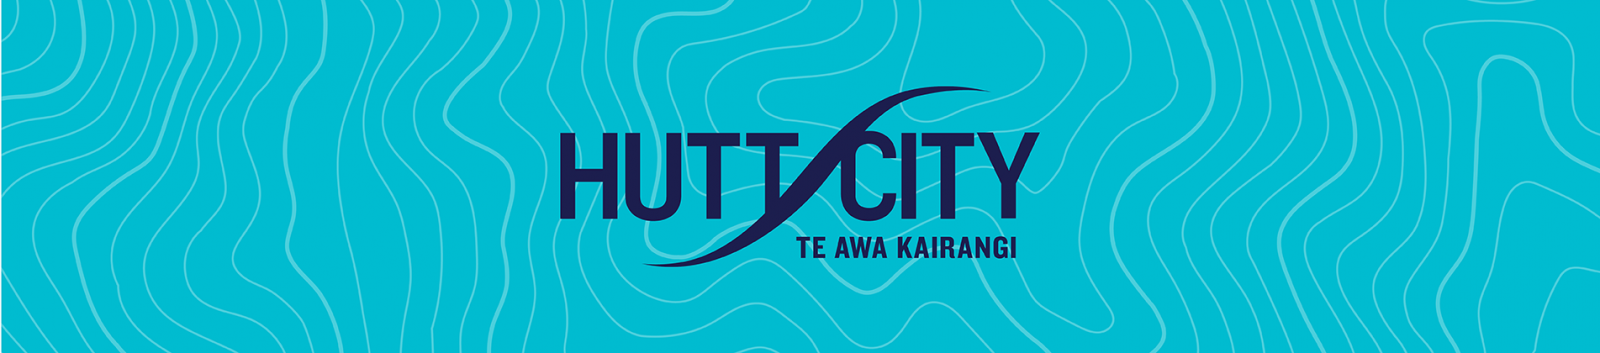 Hutt City Council logo banner image